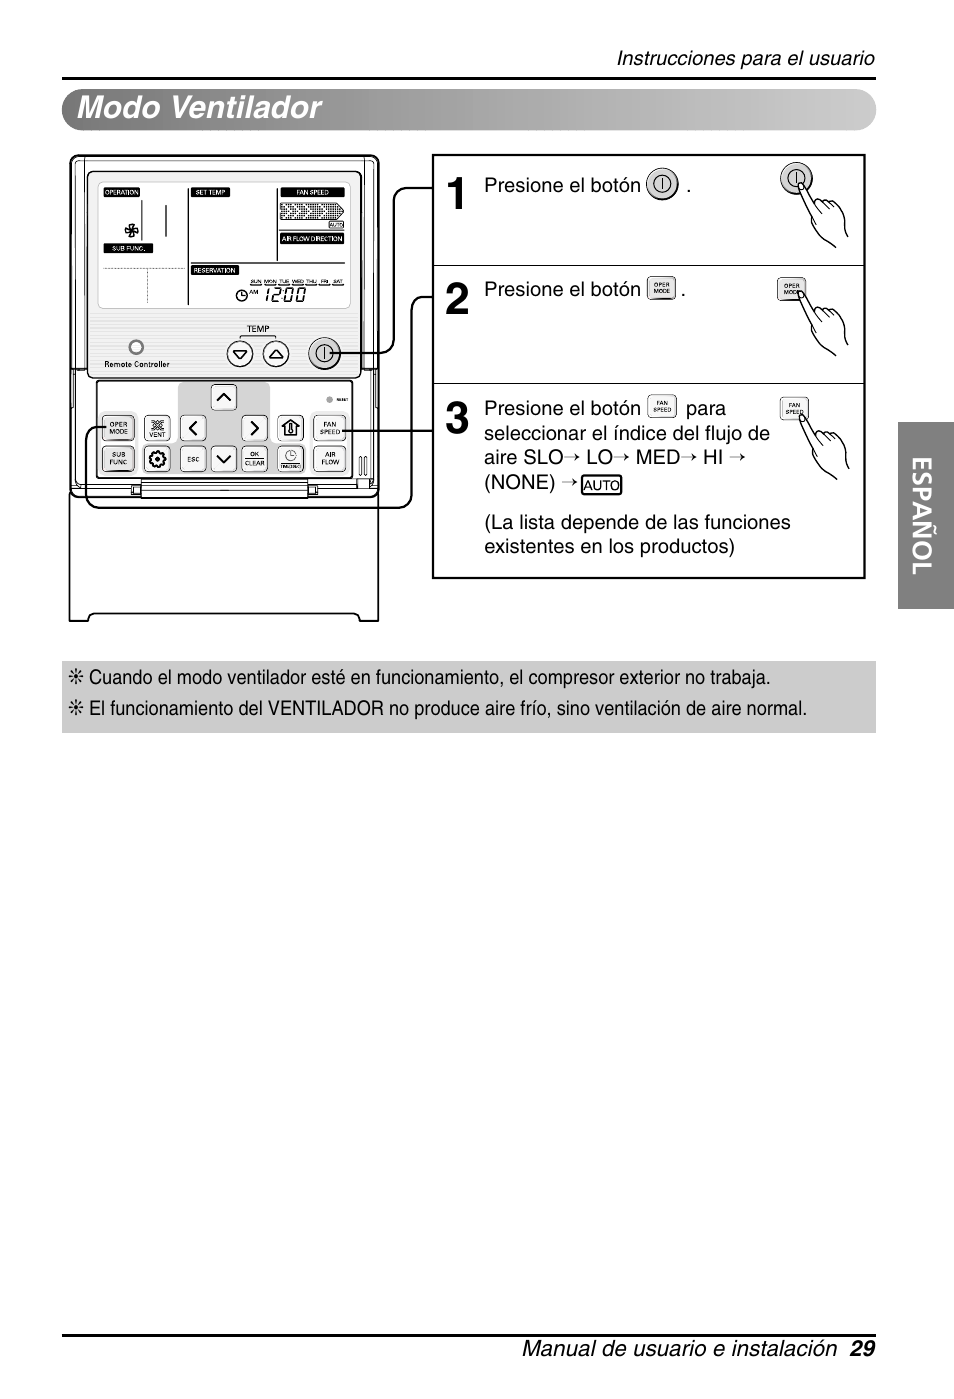 Modo ventilador | LG PQRCUSA1 Manual del usuario | Página 29 / 55